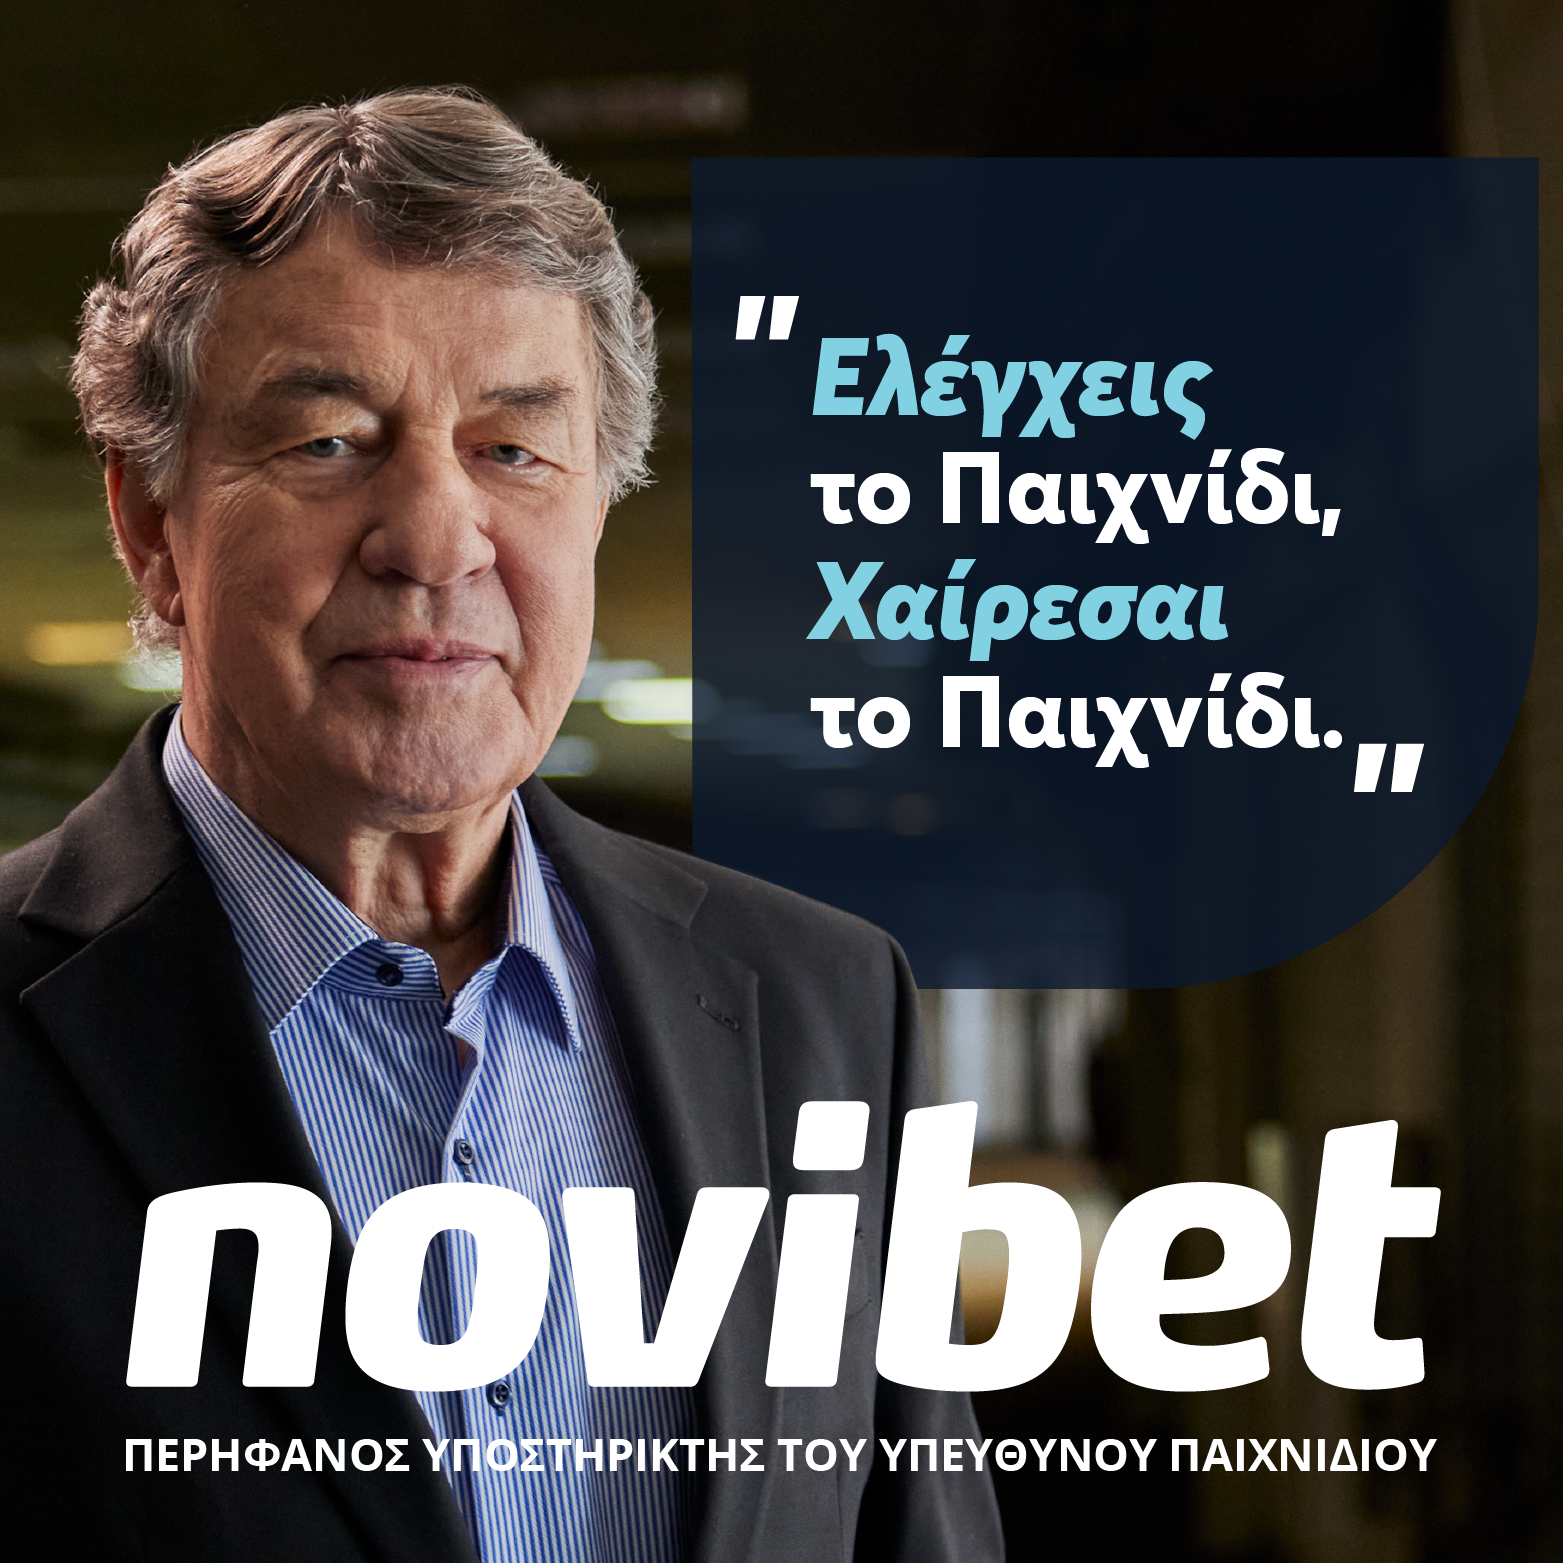 Novibet - You control the game, you enjoy the game